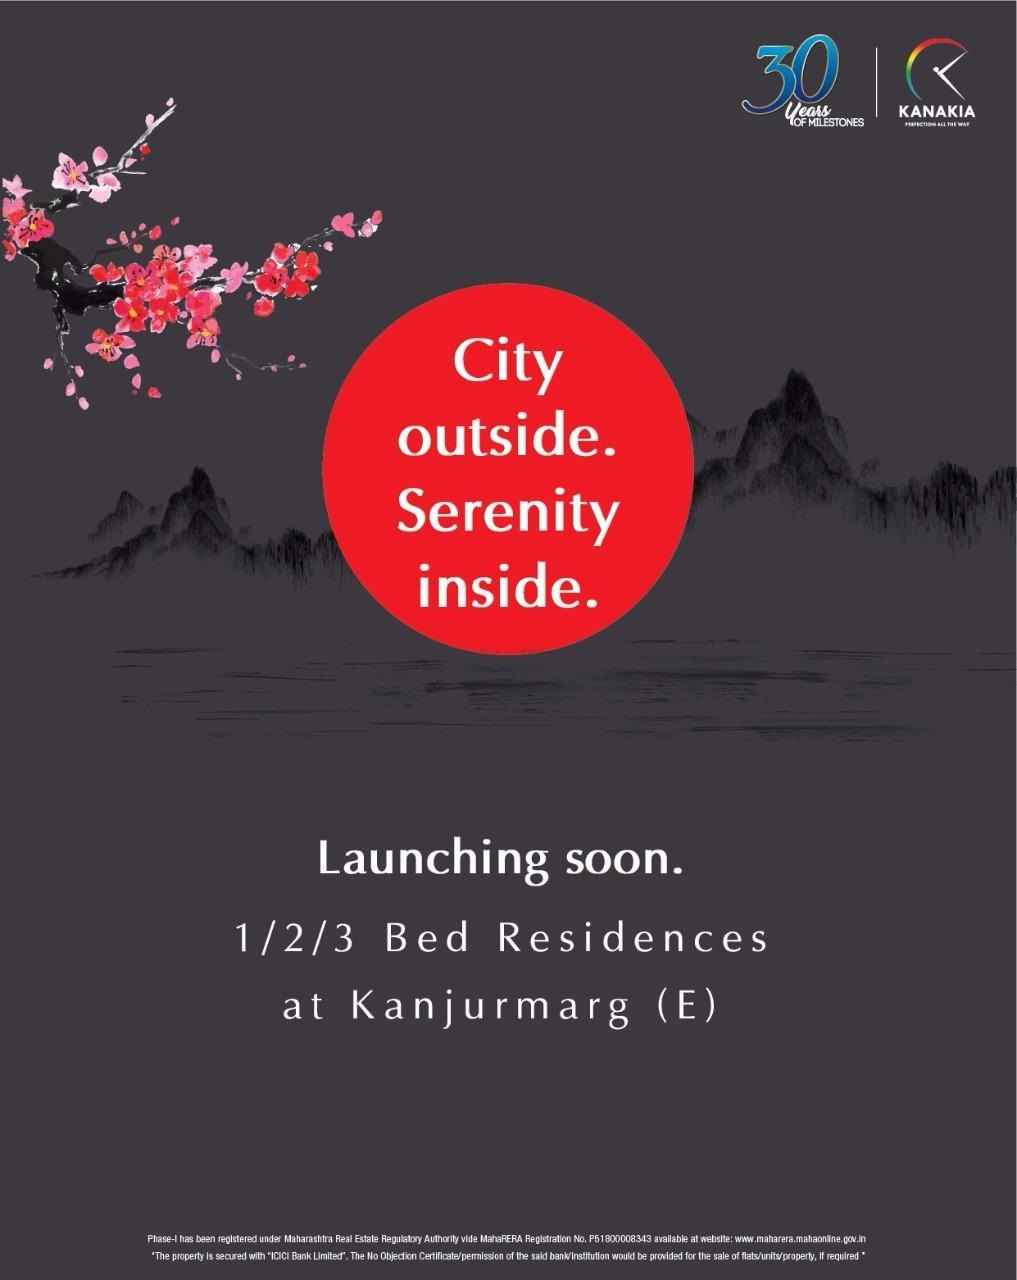 Kanakia Zen World launching soon with 1, 2 & 3 bed residences at Kanjurmarg (E) in Mumbai